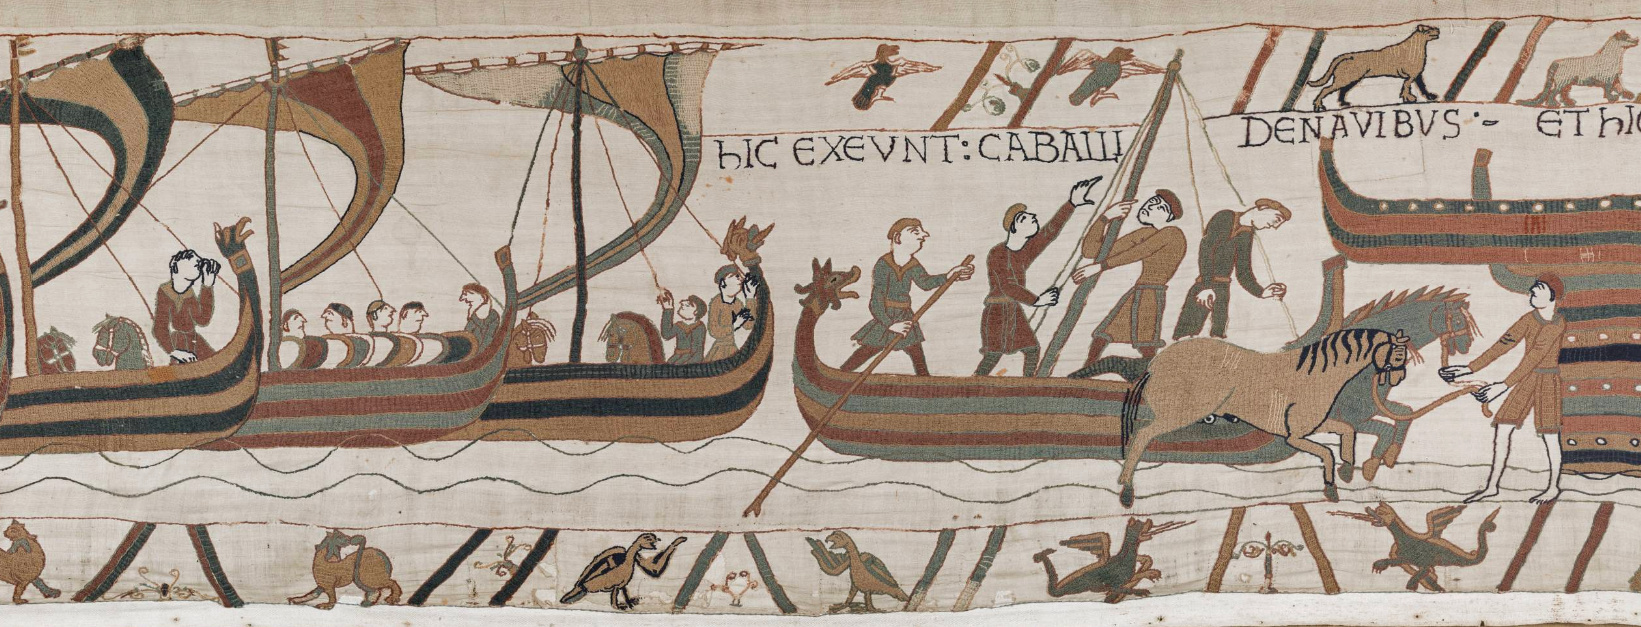 Bayeux Tapestry, Normans raising mast, loading horses.